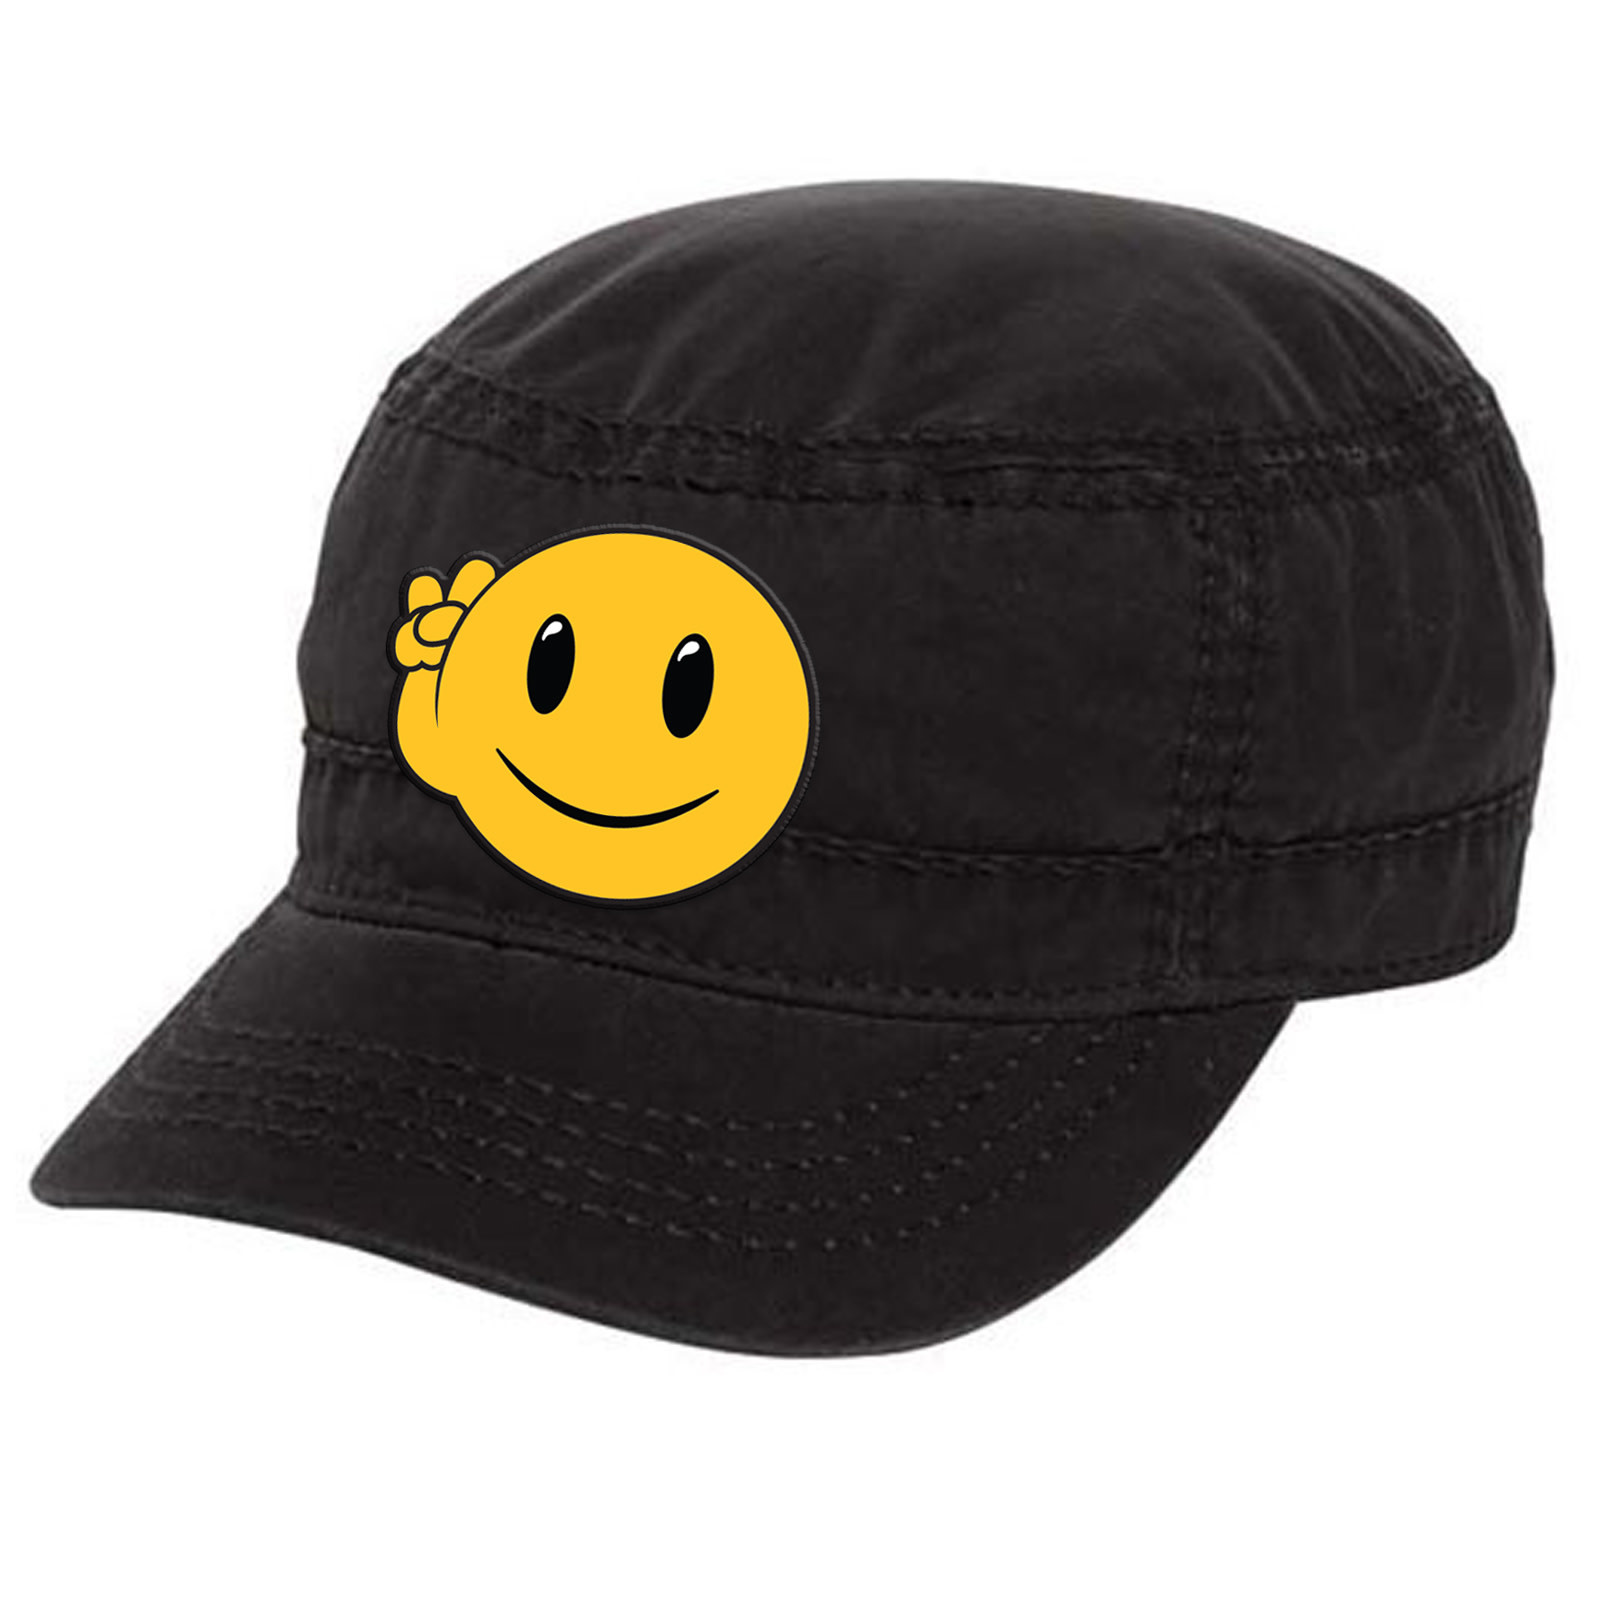 Disc - Peace Smiley Face Black Military Cap